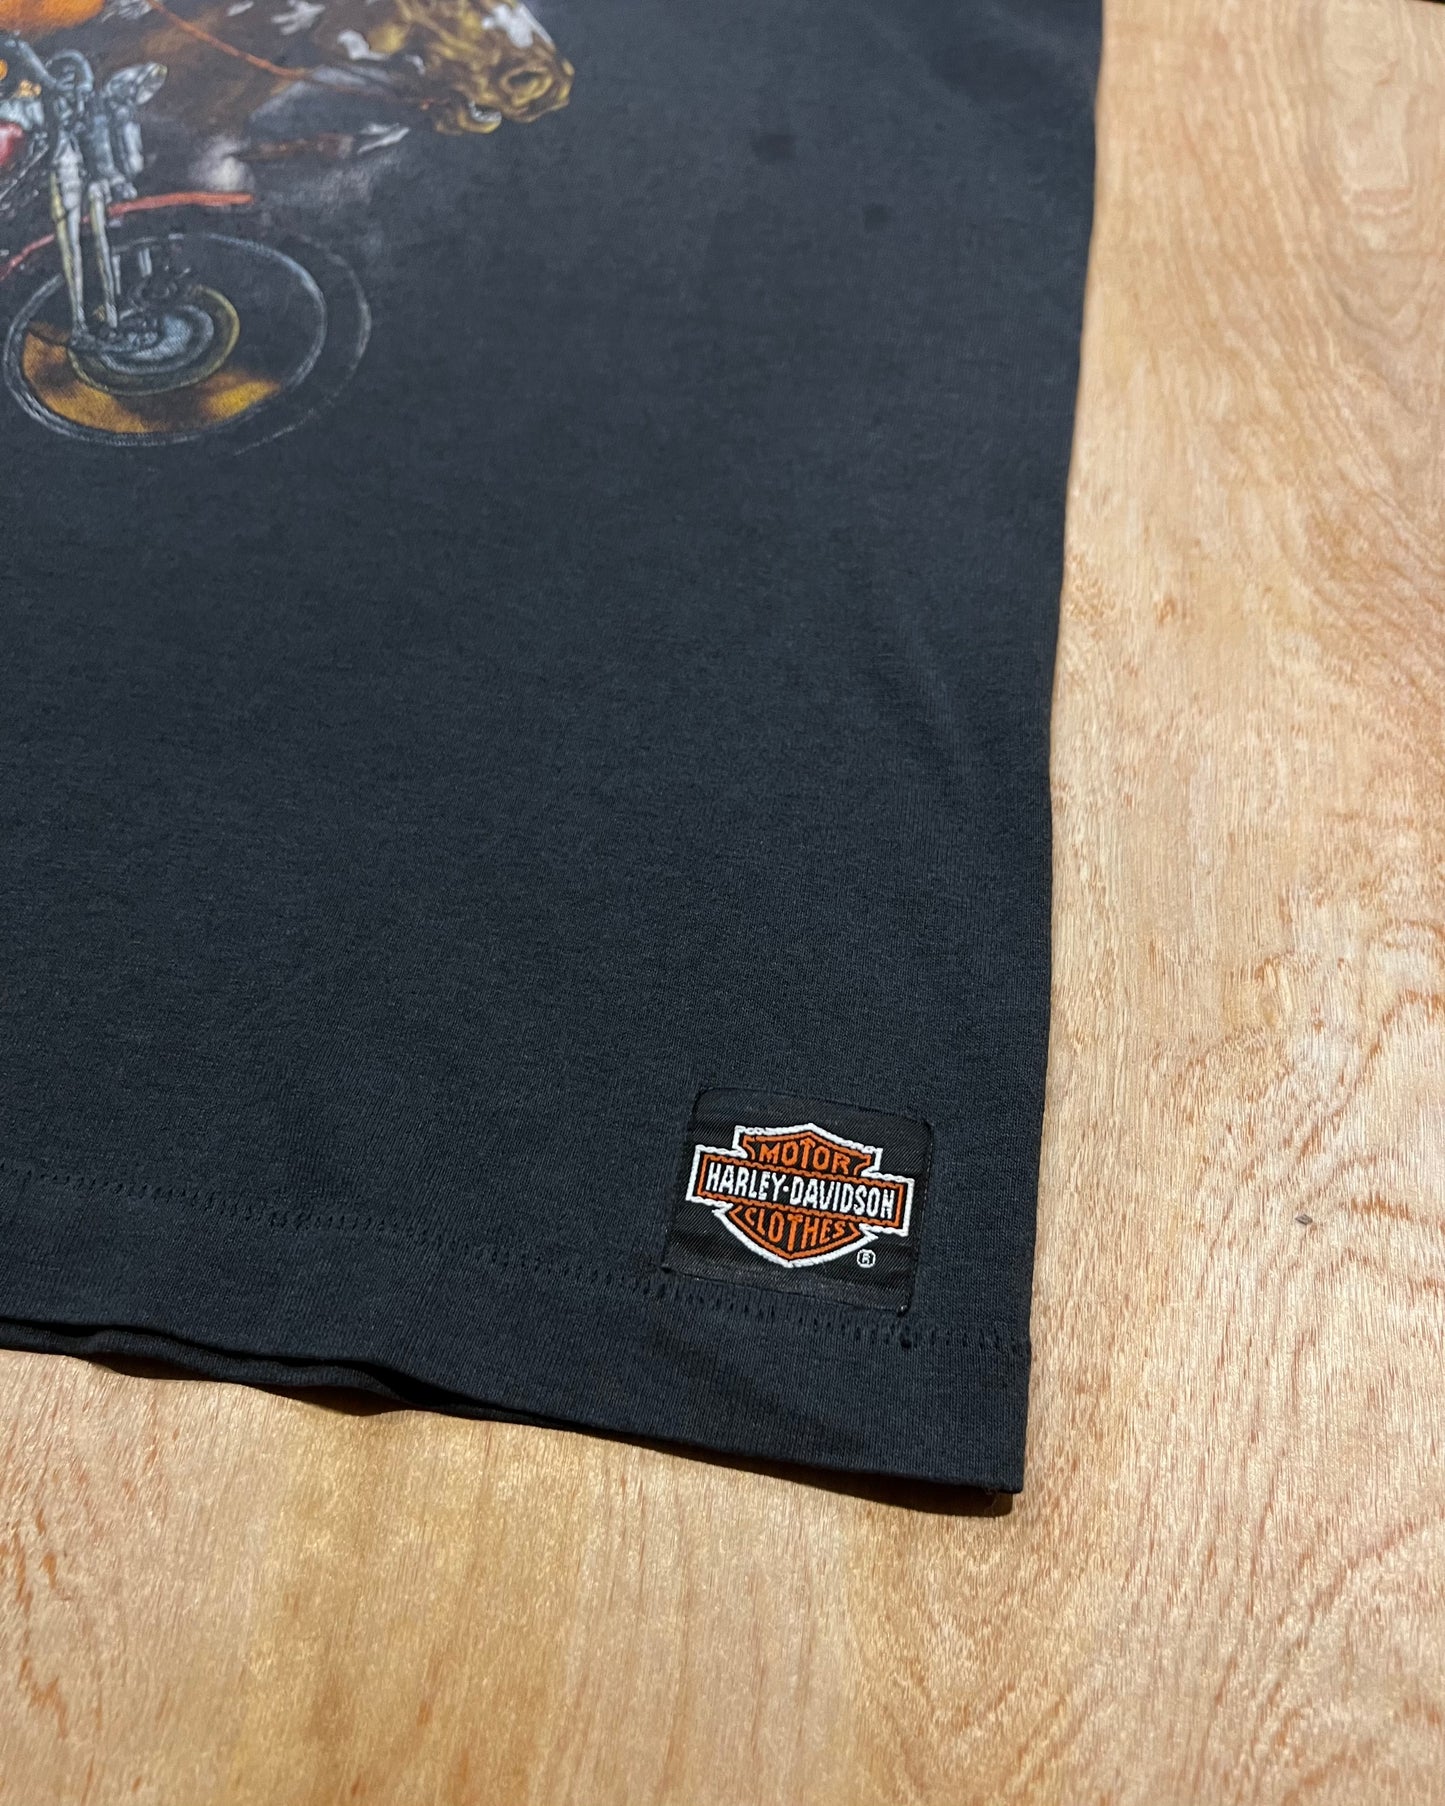 Vintage Harley Davidson "Ride like the Wind" Single Stitch T-Shirt